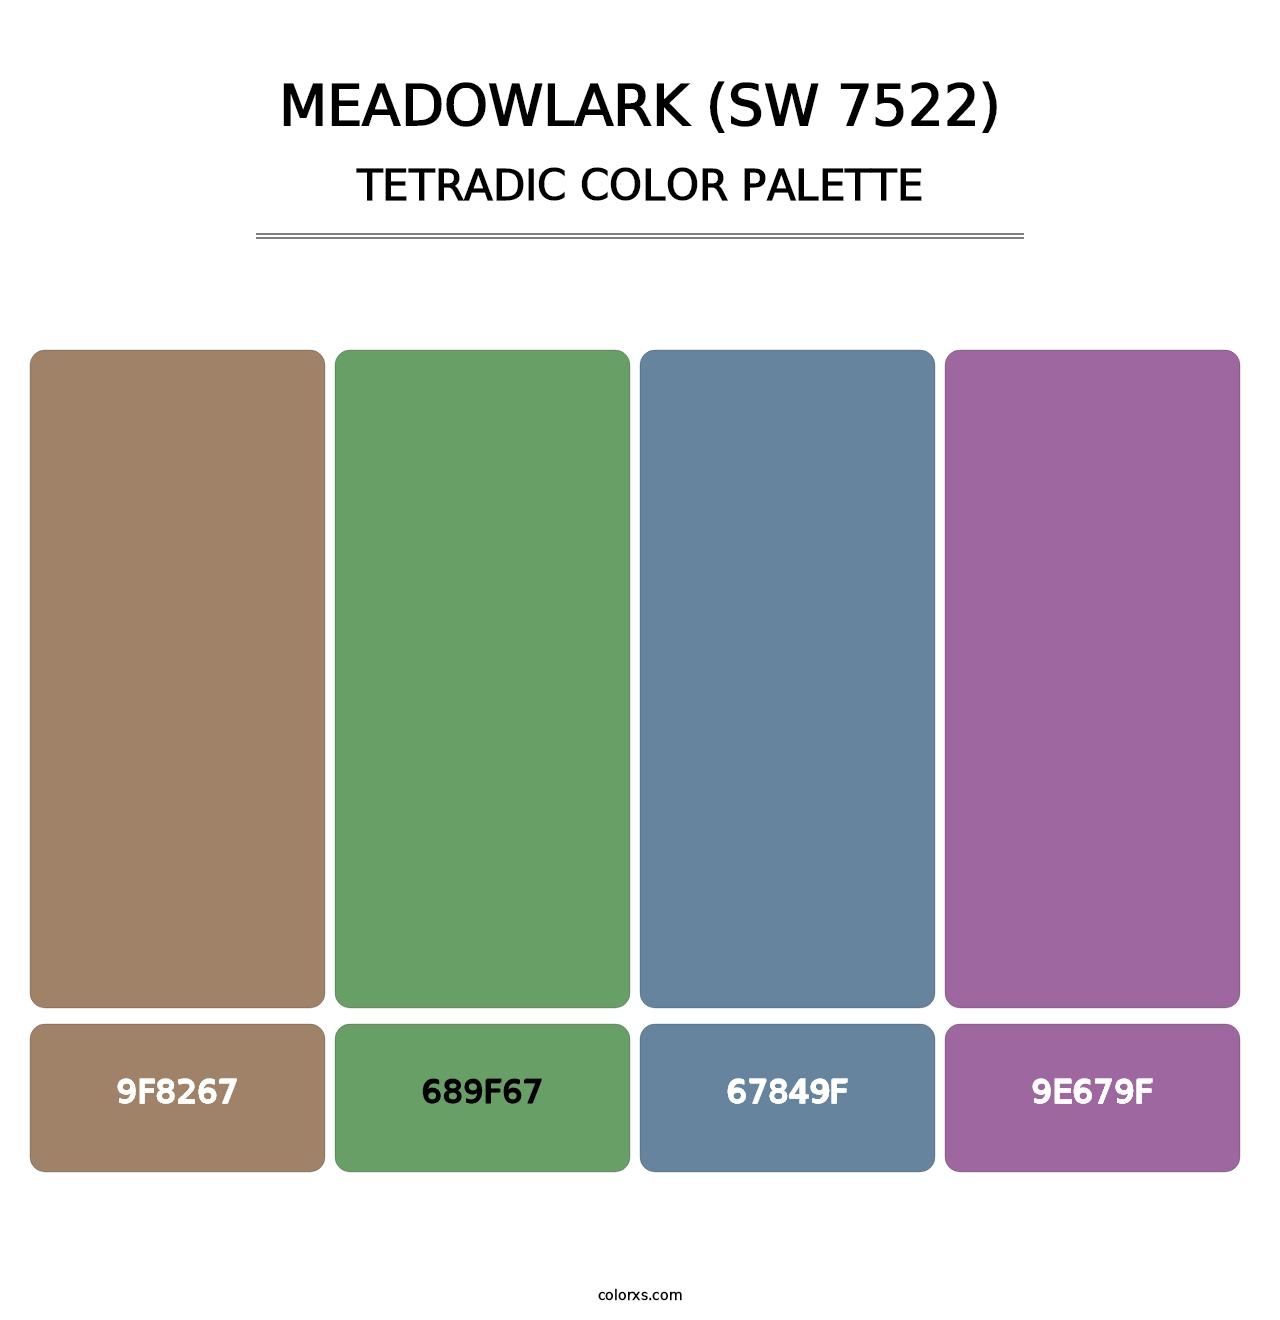 Meadowlark (SW 7522) - Tetradic Color Palette